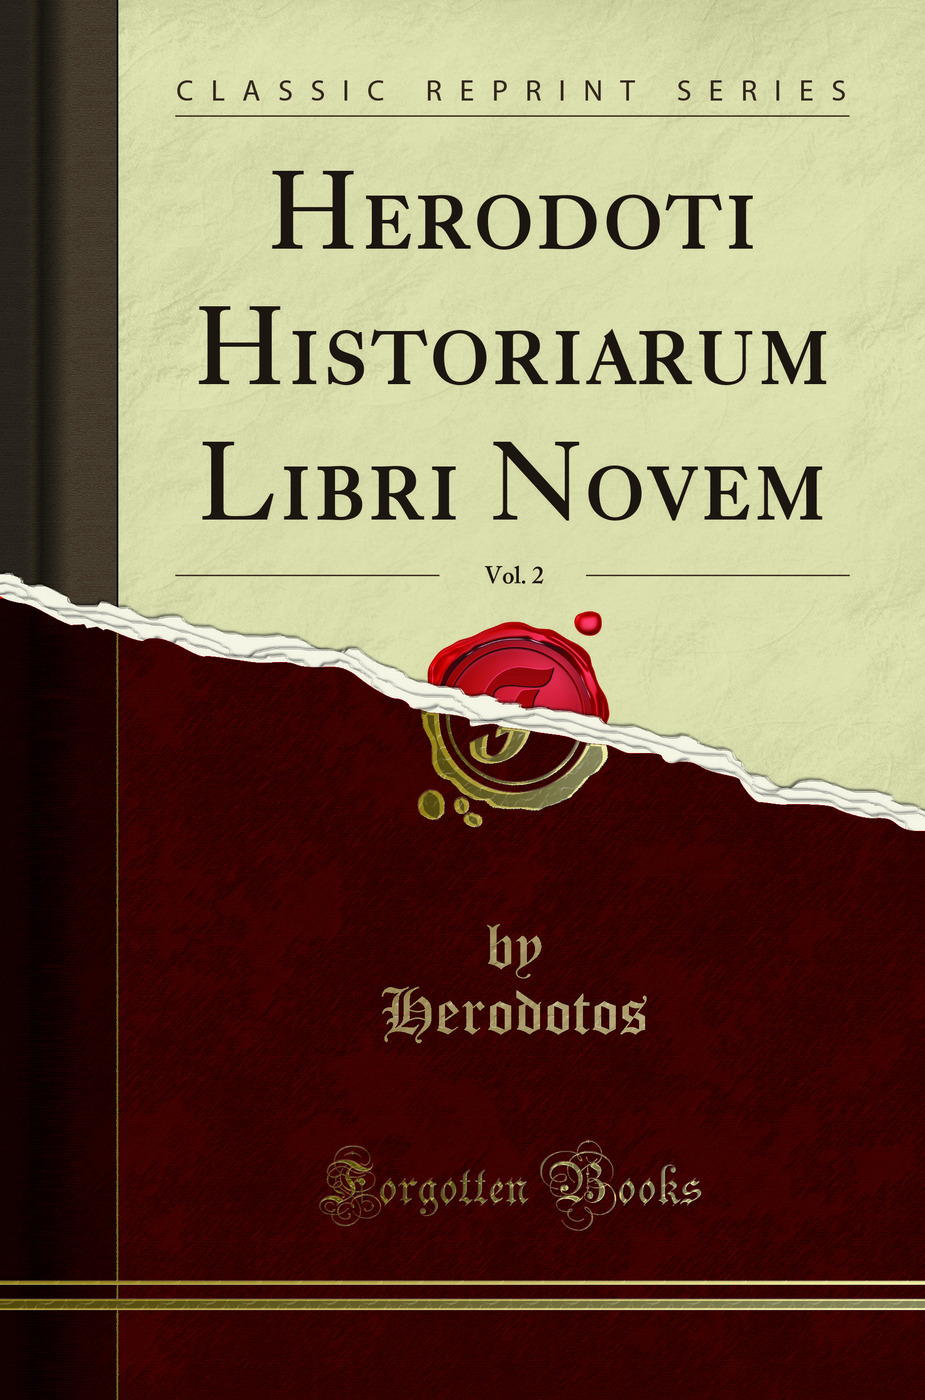 Herodoti Historiarum Libri Novem, Vol. 2 (Classic Reprint) - Herodotos